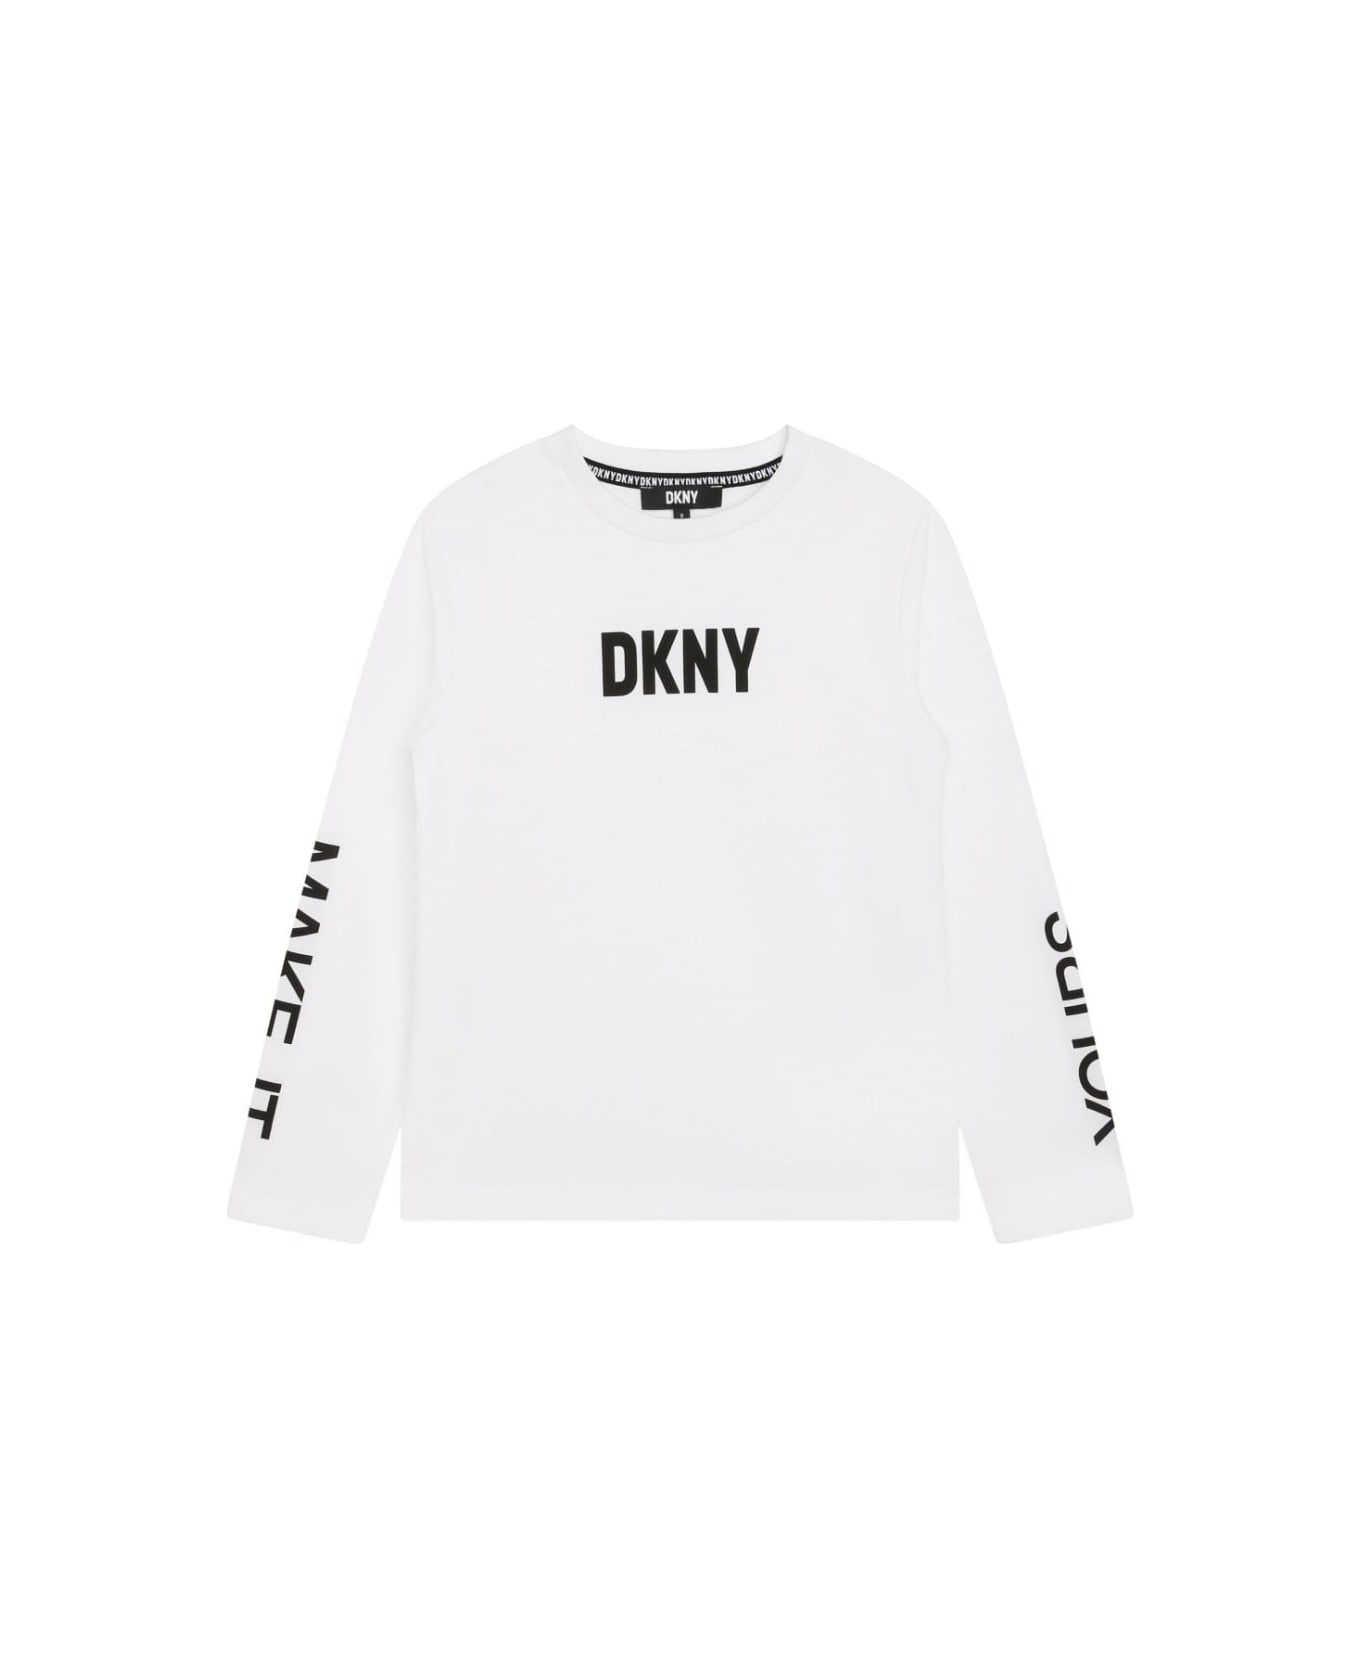 DKNY T-shirt Nera In Jersey Di Cotone Bambino - Nero